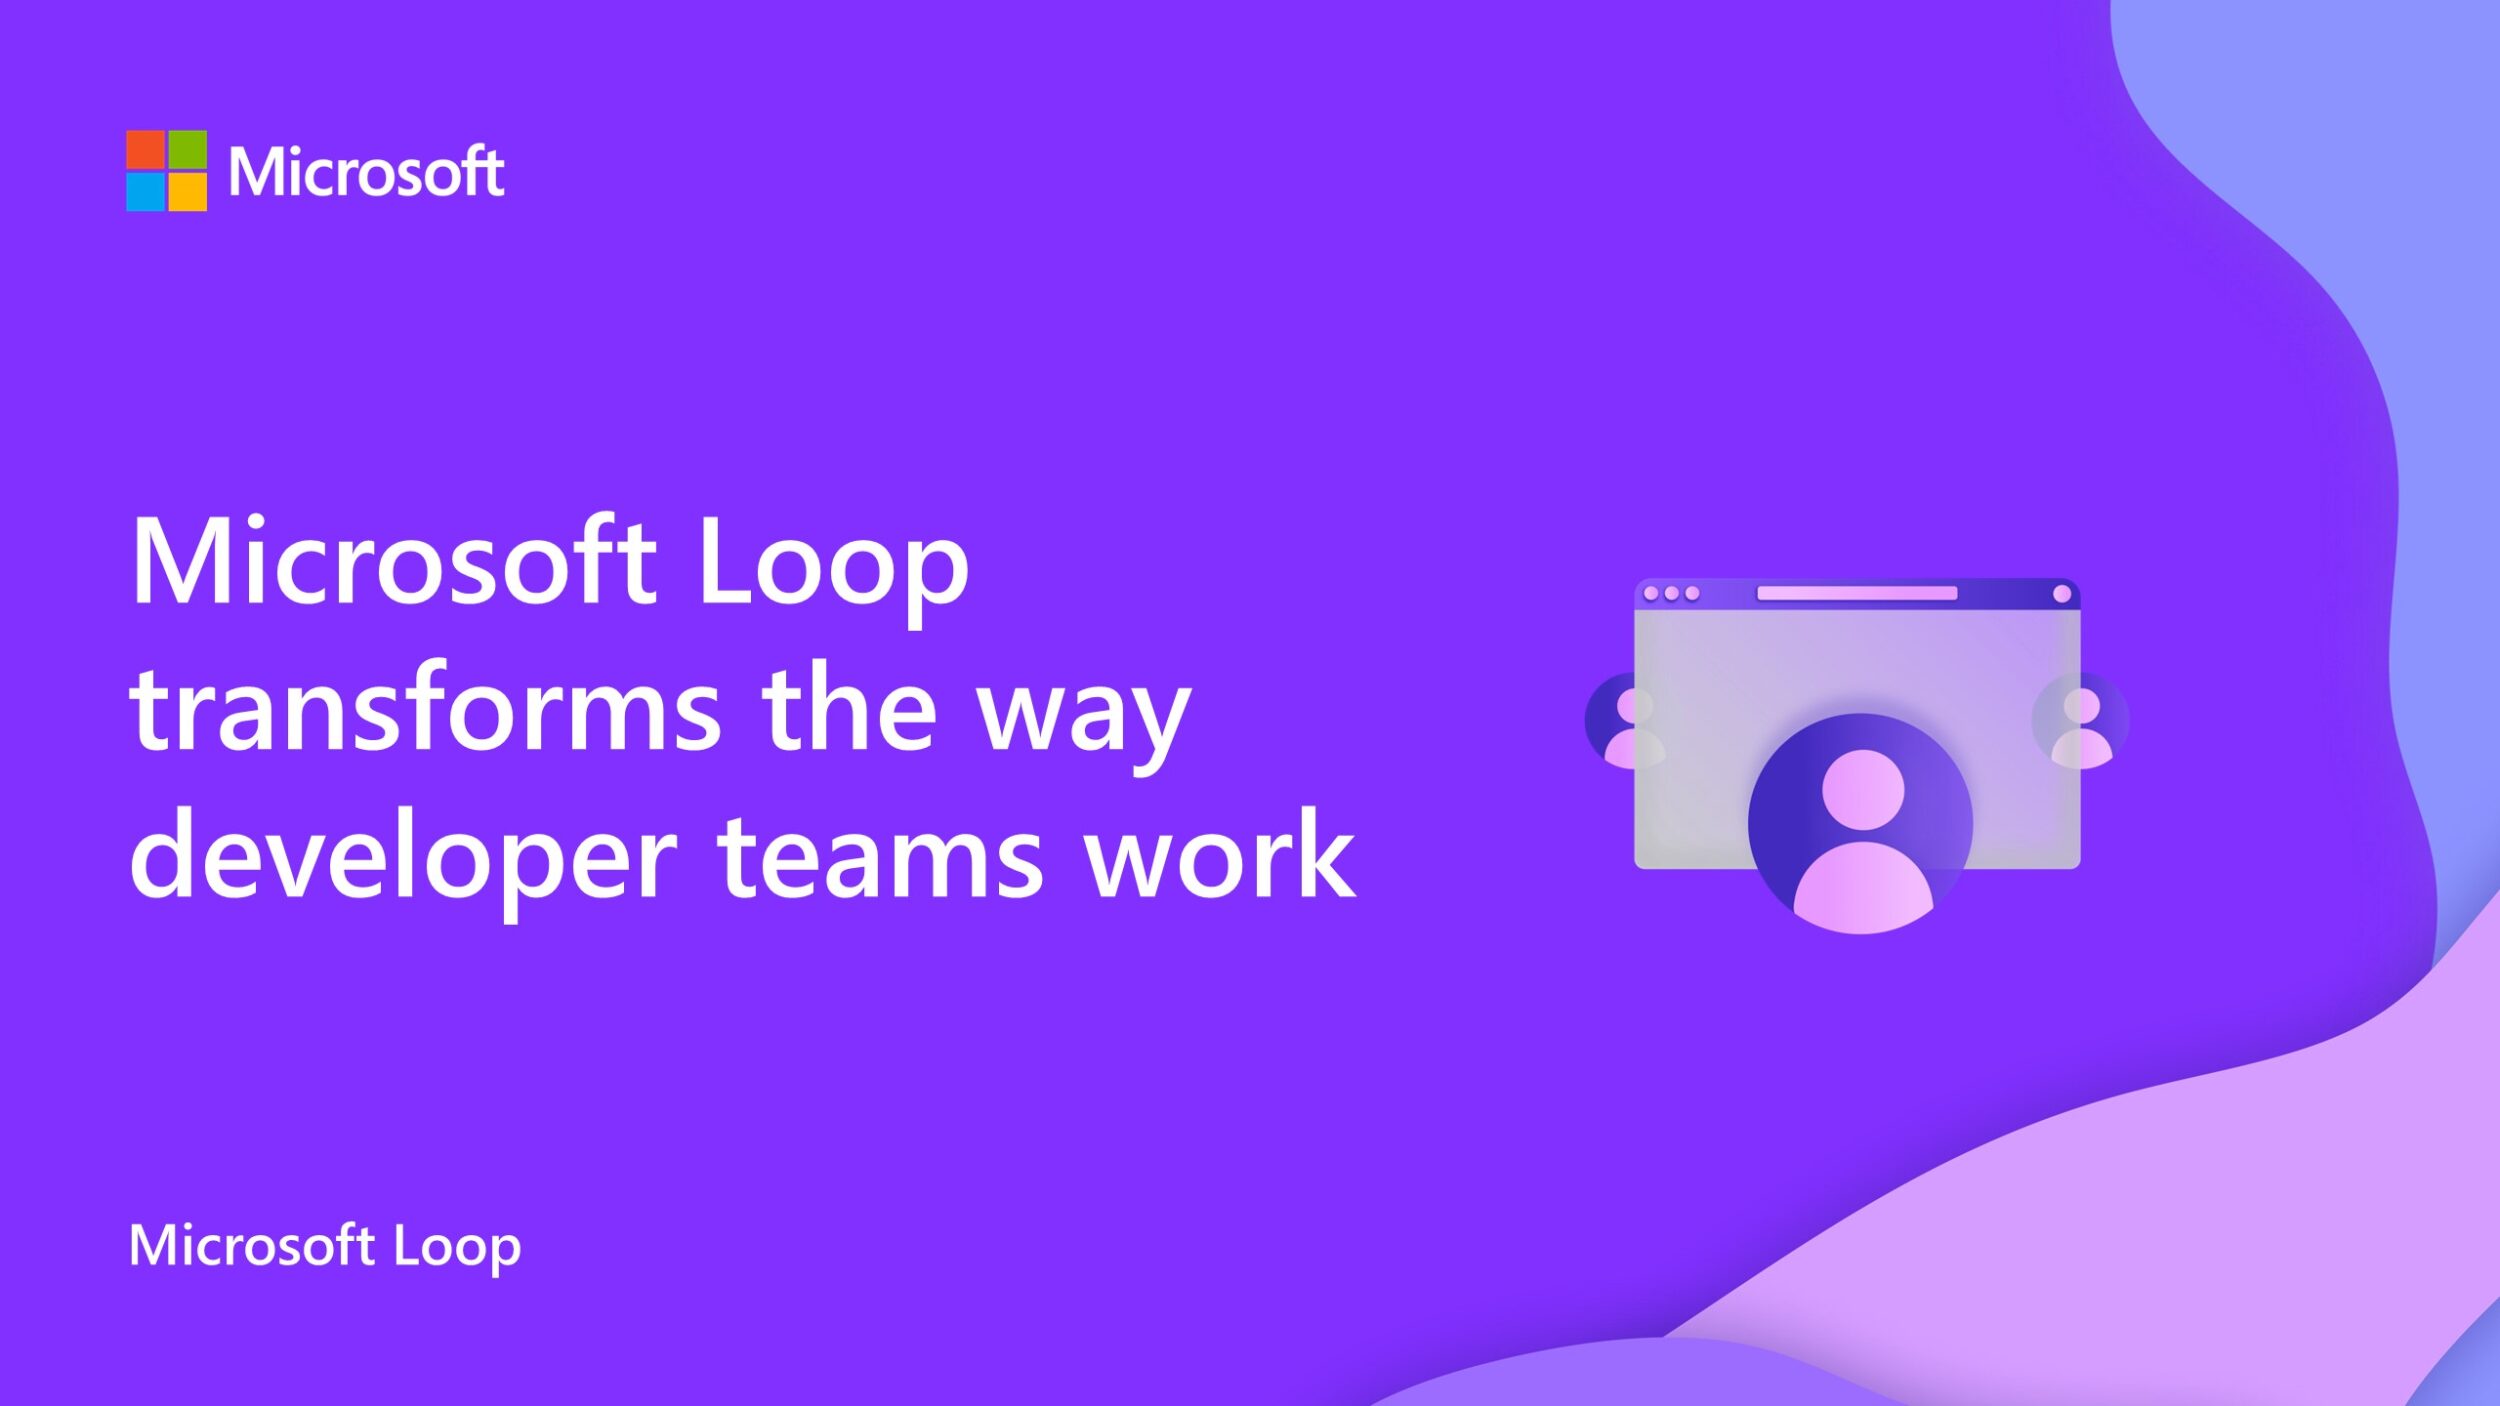 Microsoft Loop transforms the way developer teams work